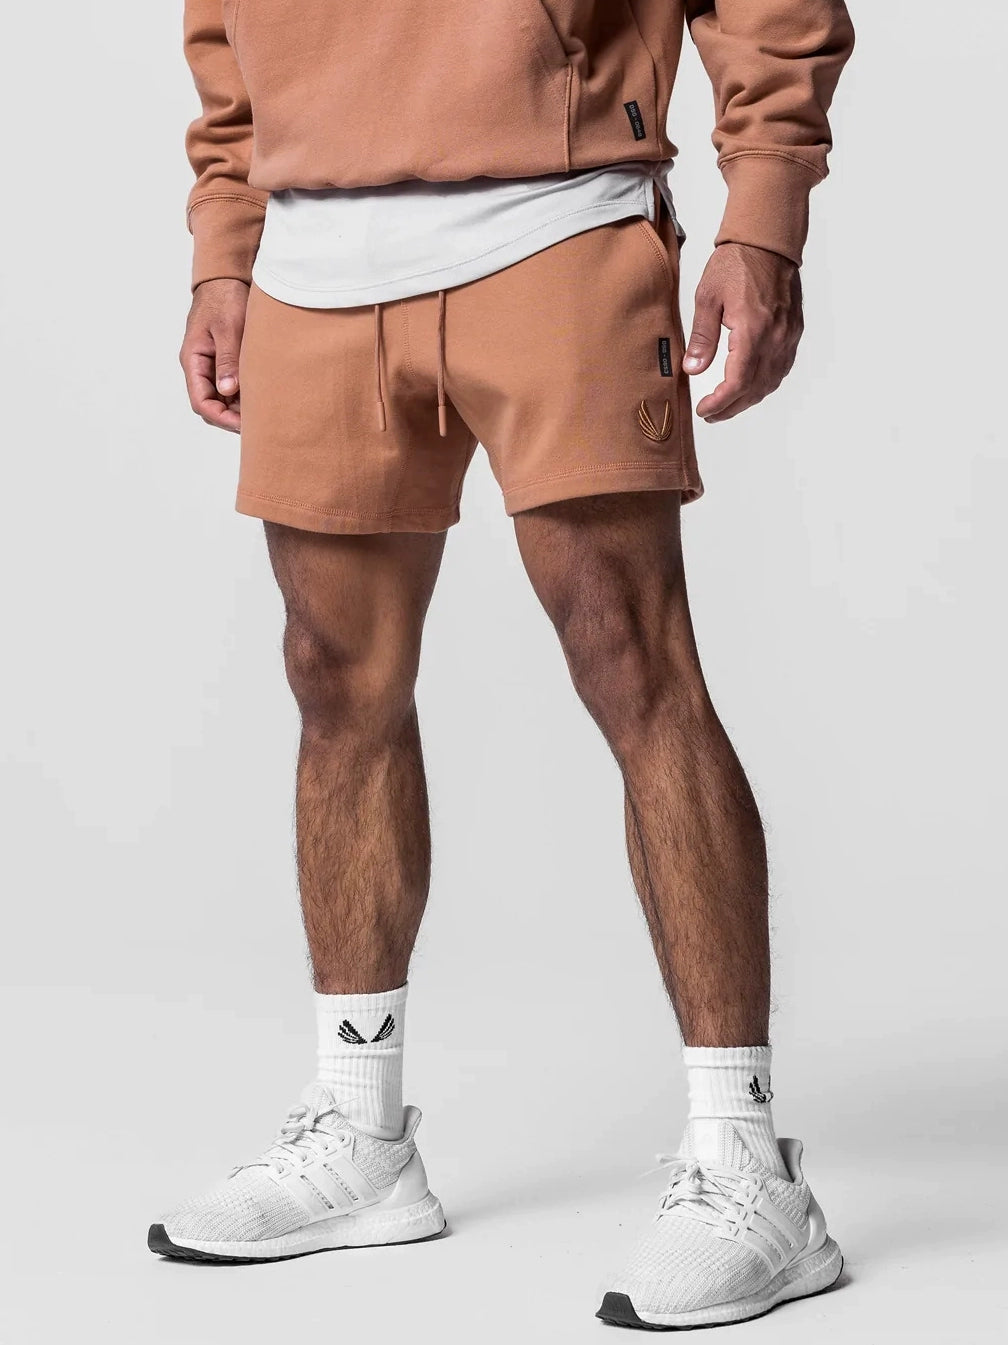 "ASRV"  Embroidered Men's Shorts.